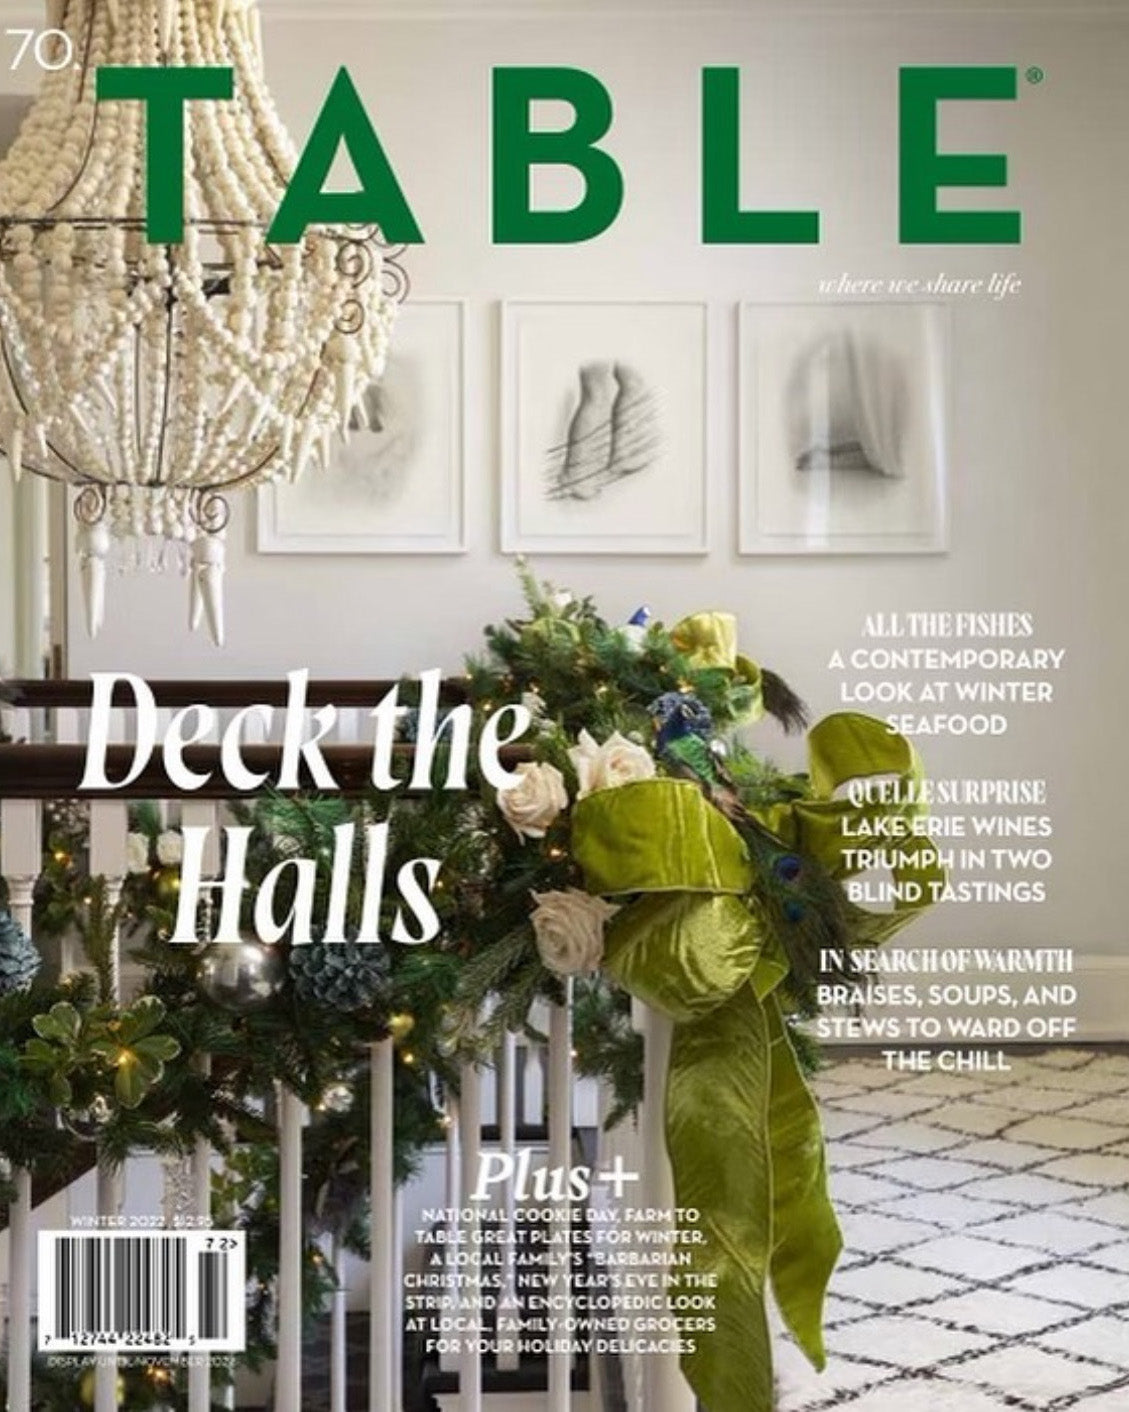 Table Magazine